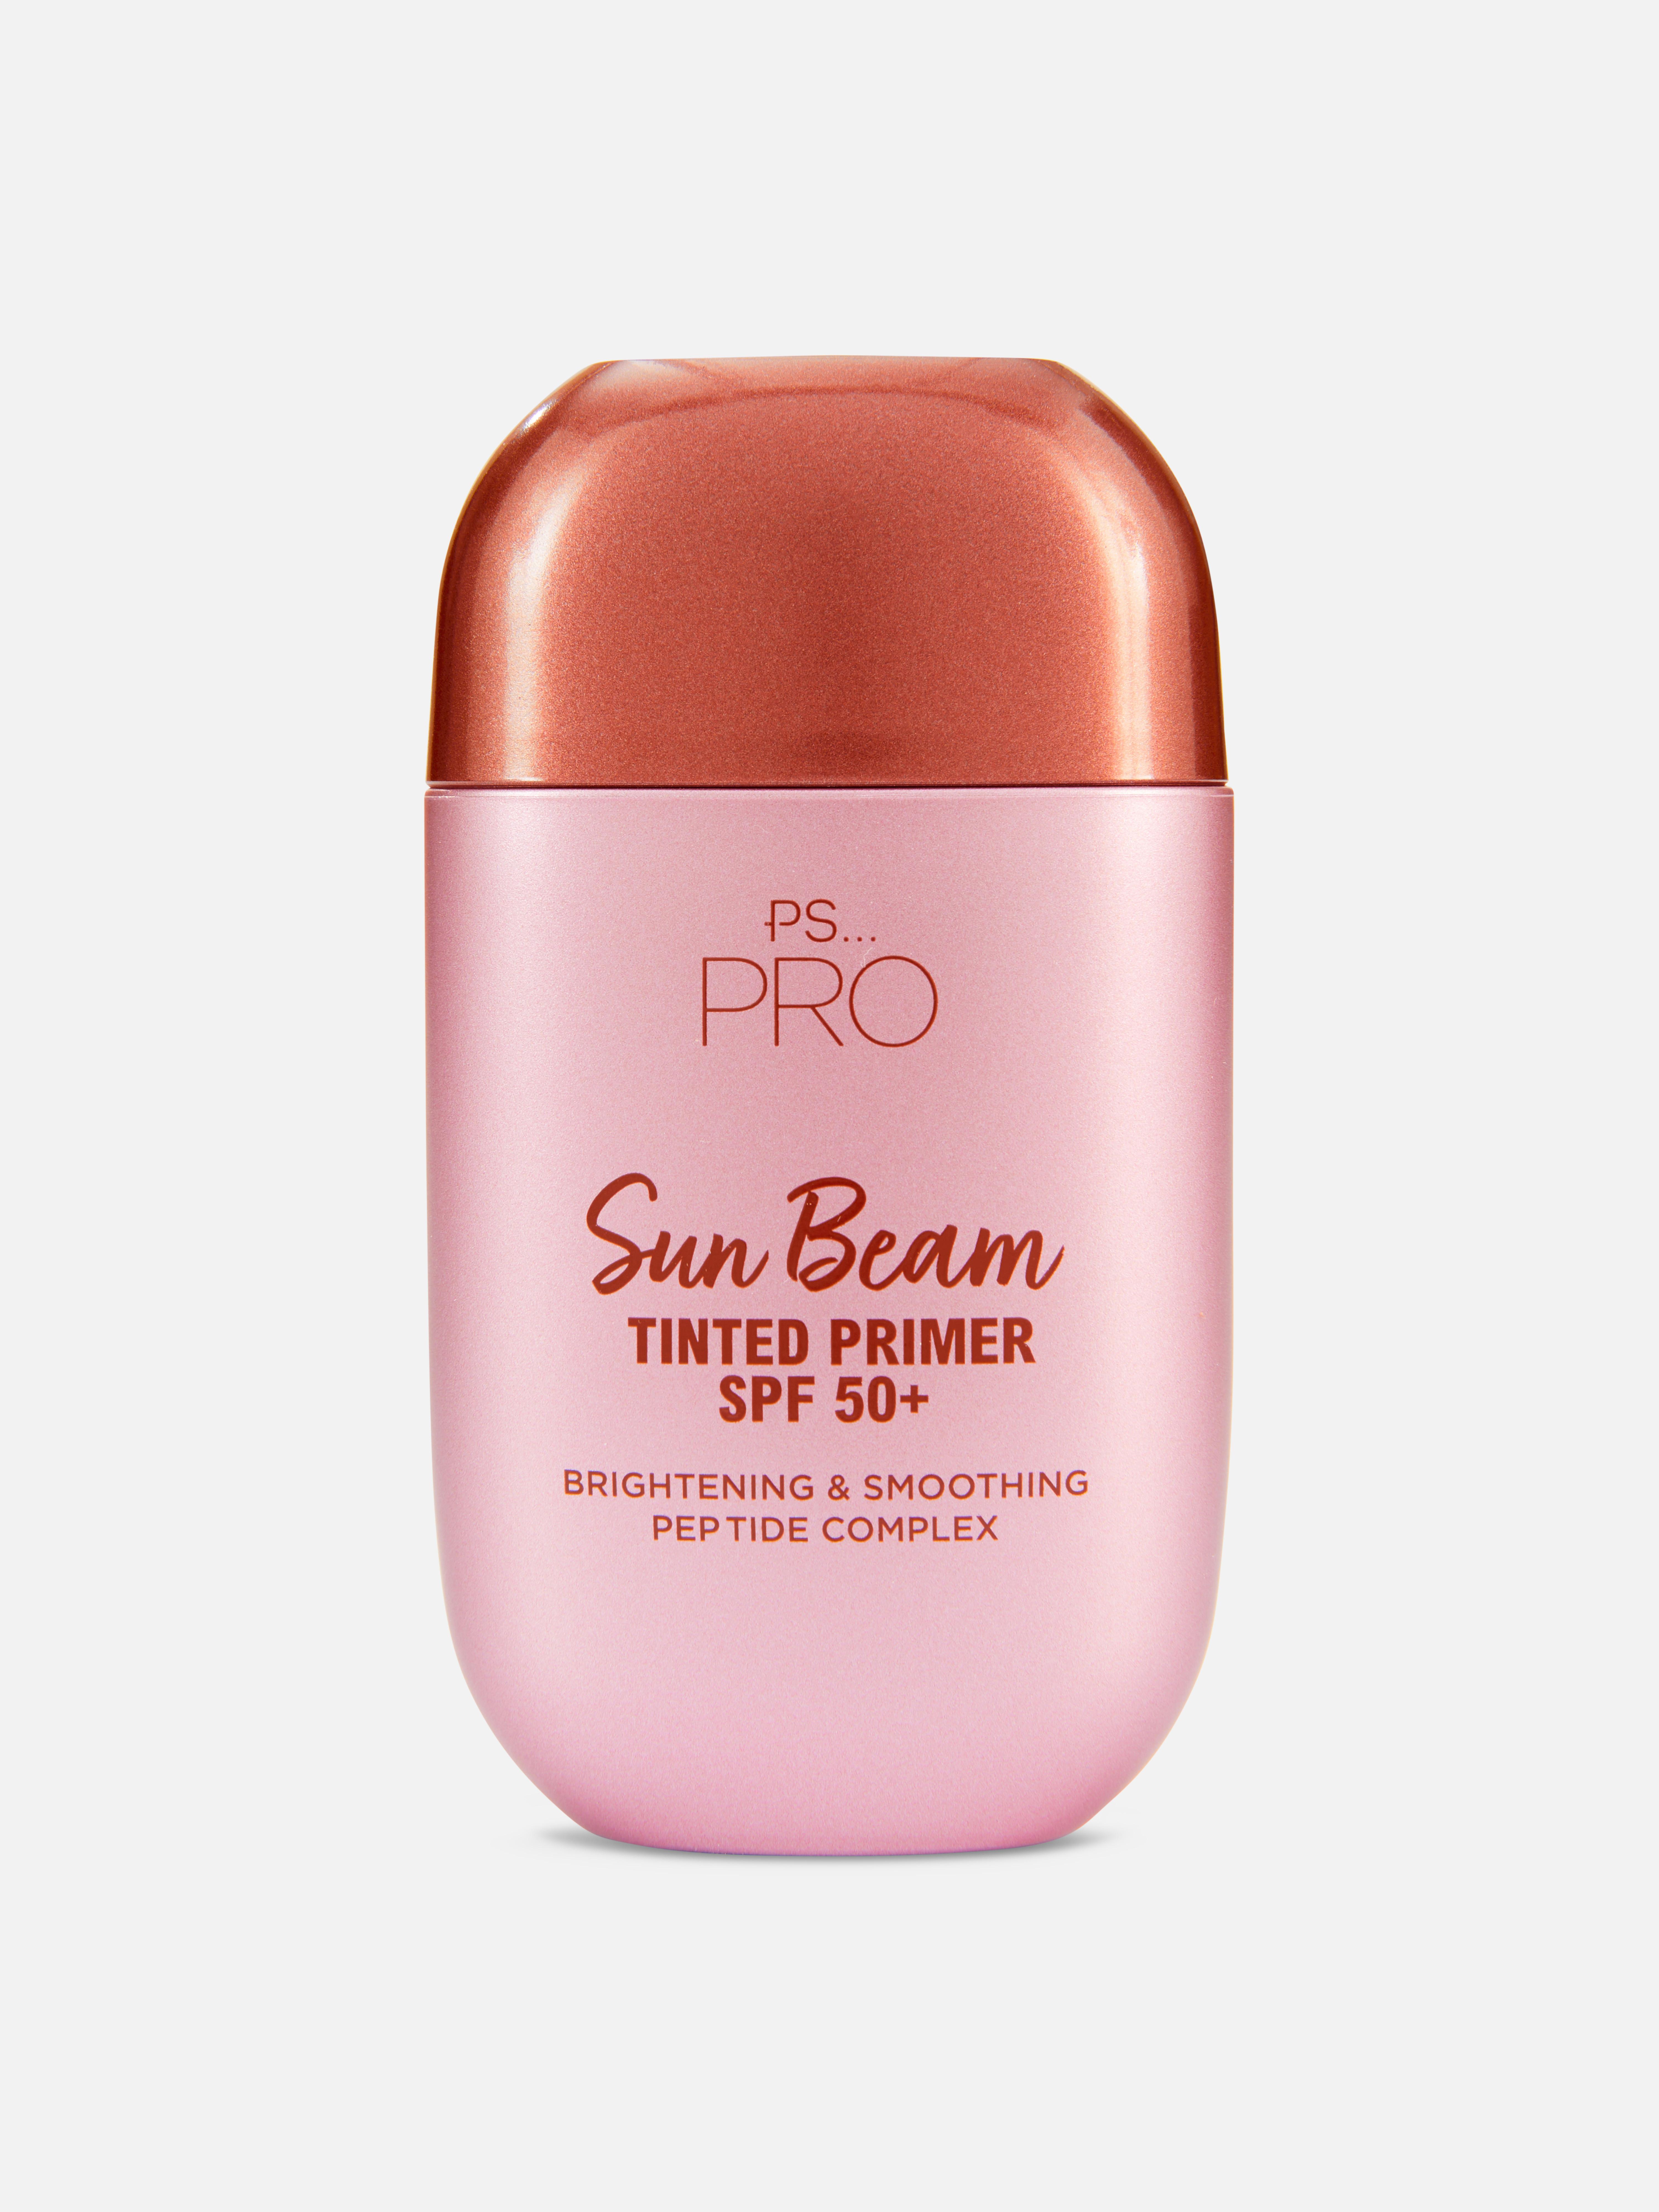 PS... Pro Sun Beam Tinted Primer SPF 50+